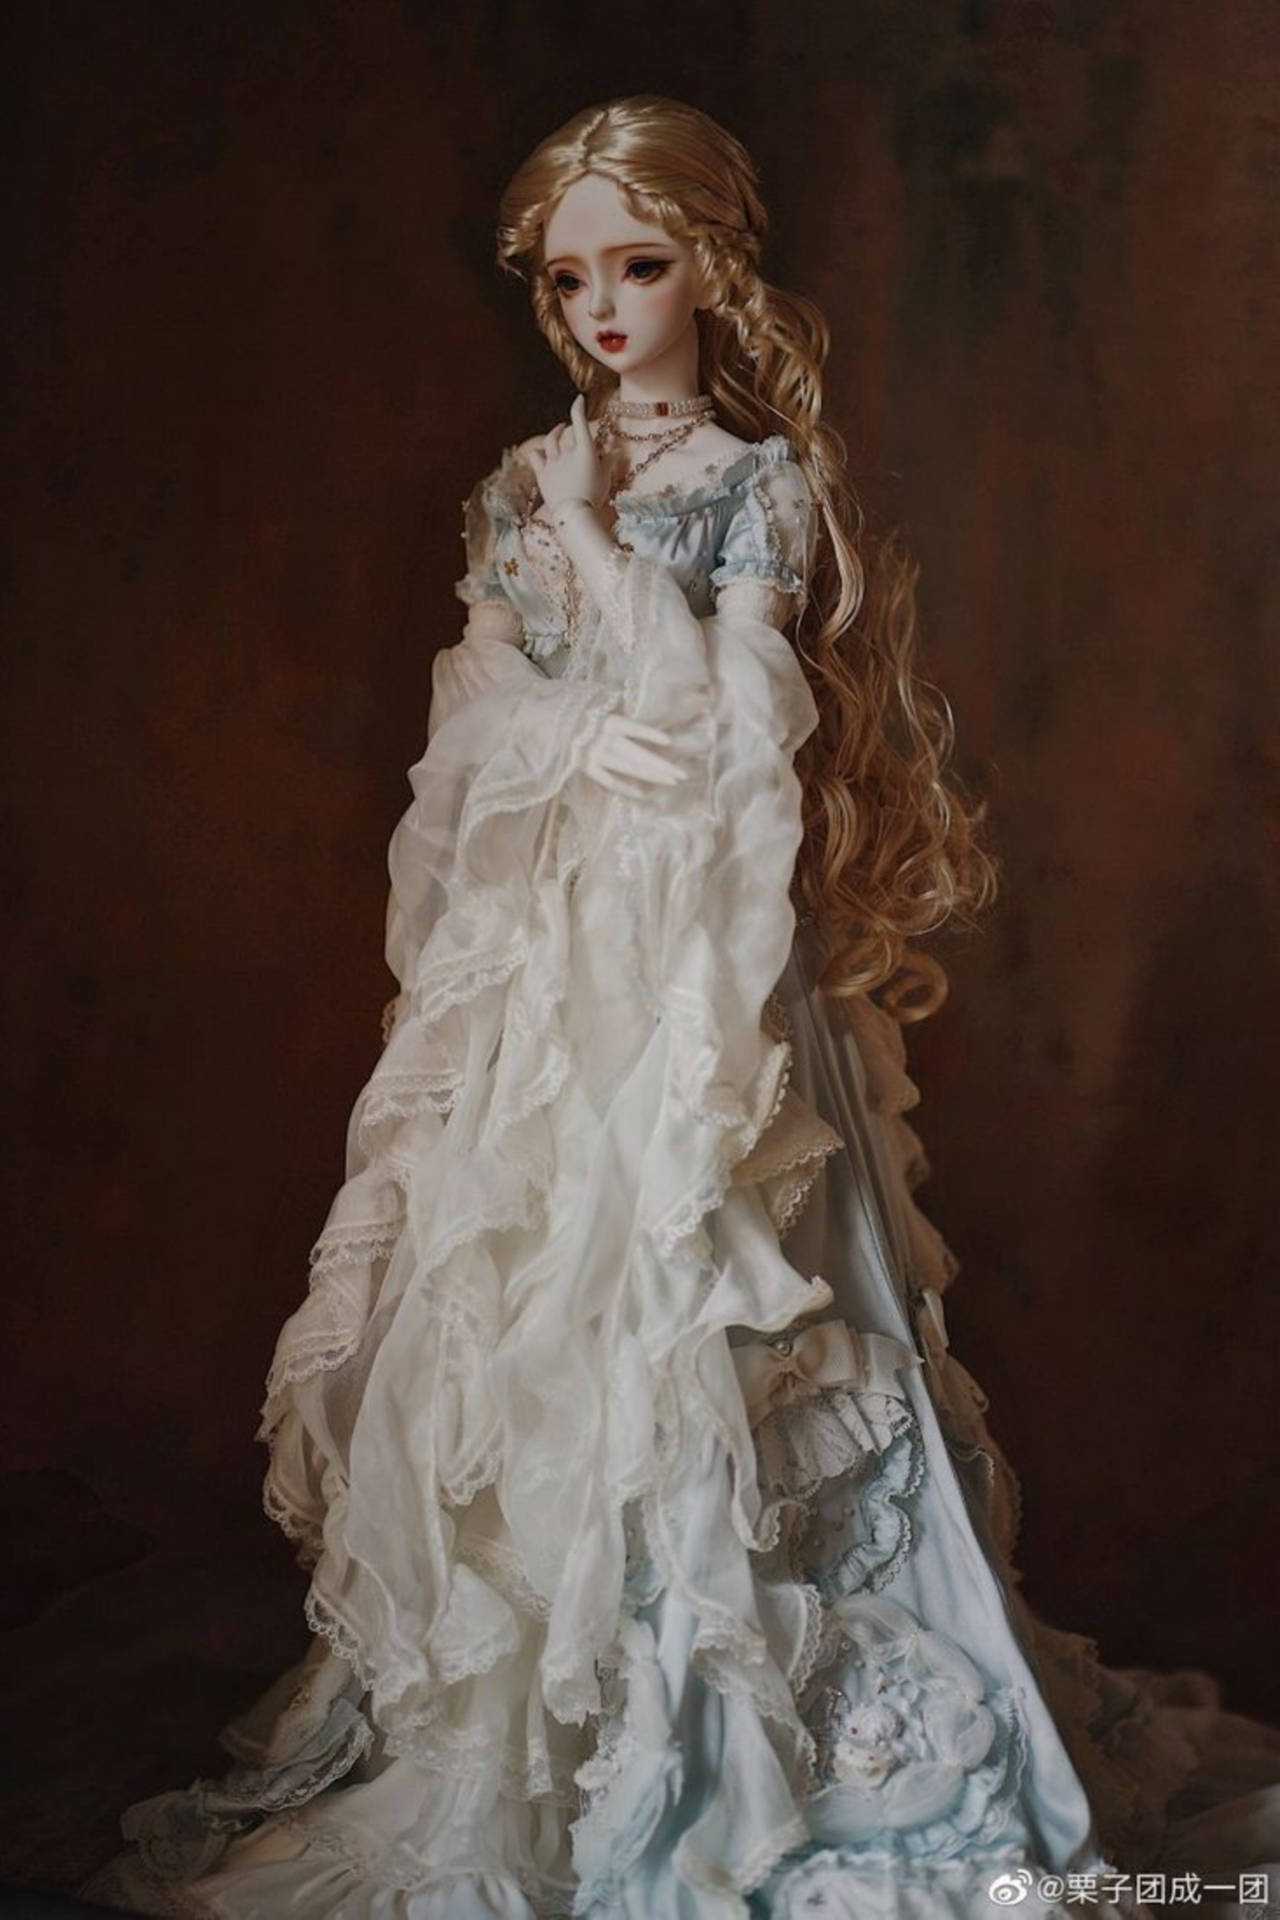 Graceful Barbie Doll Dressed In A Flowy Gown